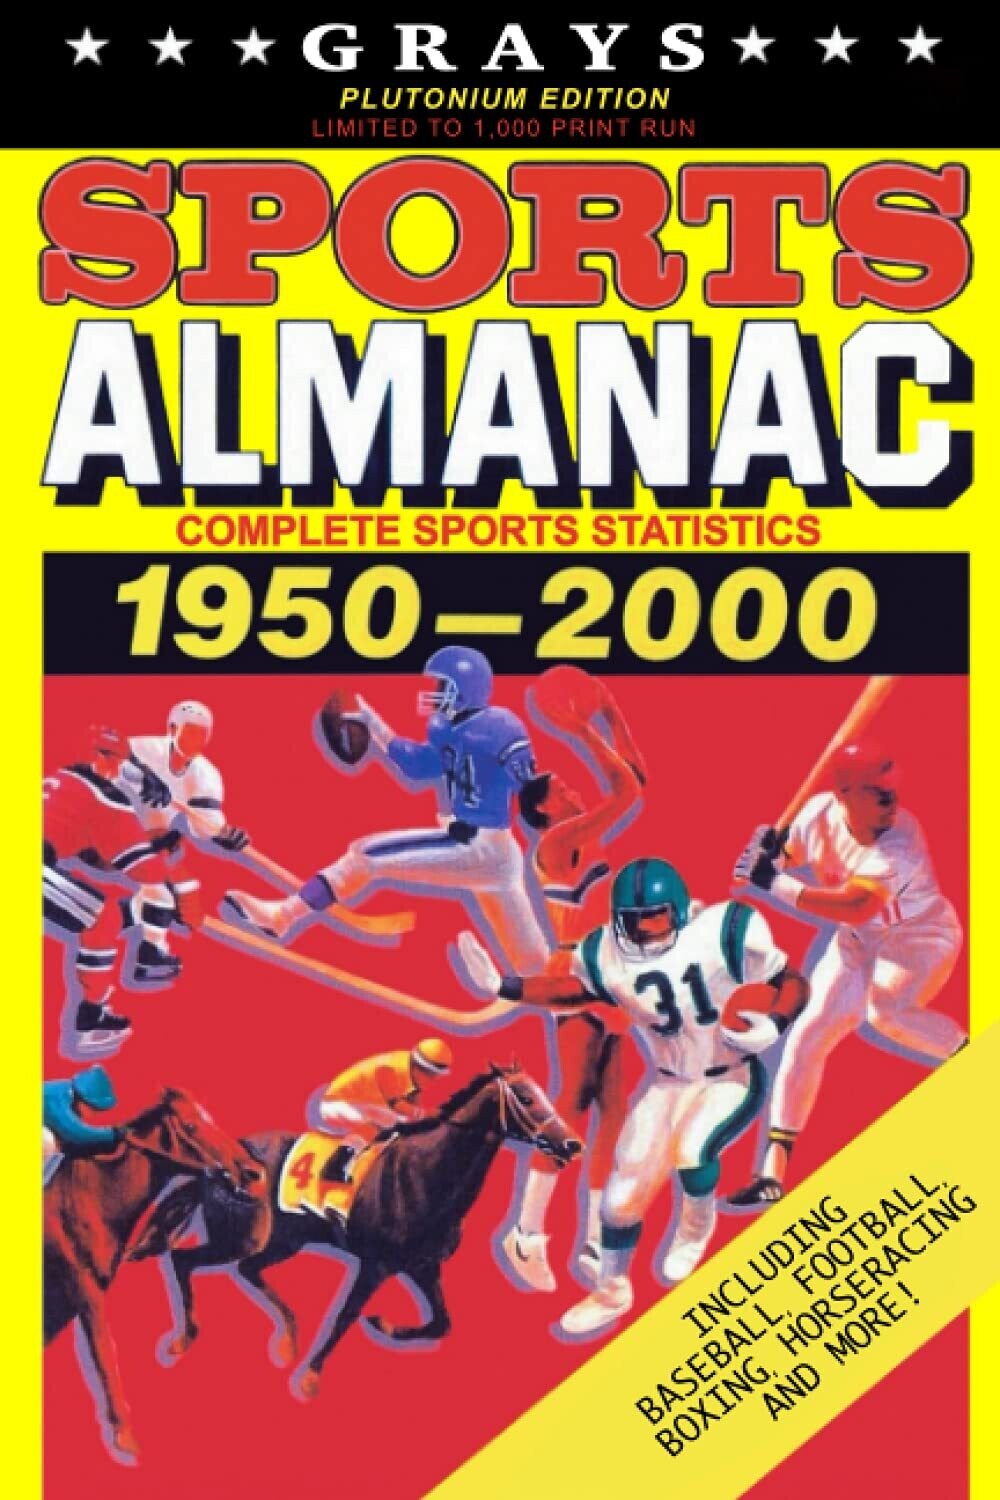 Grays Sports Almanac: Complete Sports Statistics 1950-2000 Book [Plutonium Edition - LIMITED TO 1,000 PRINT RUN]